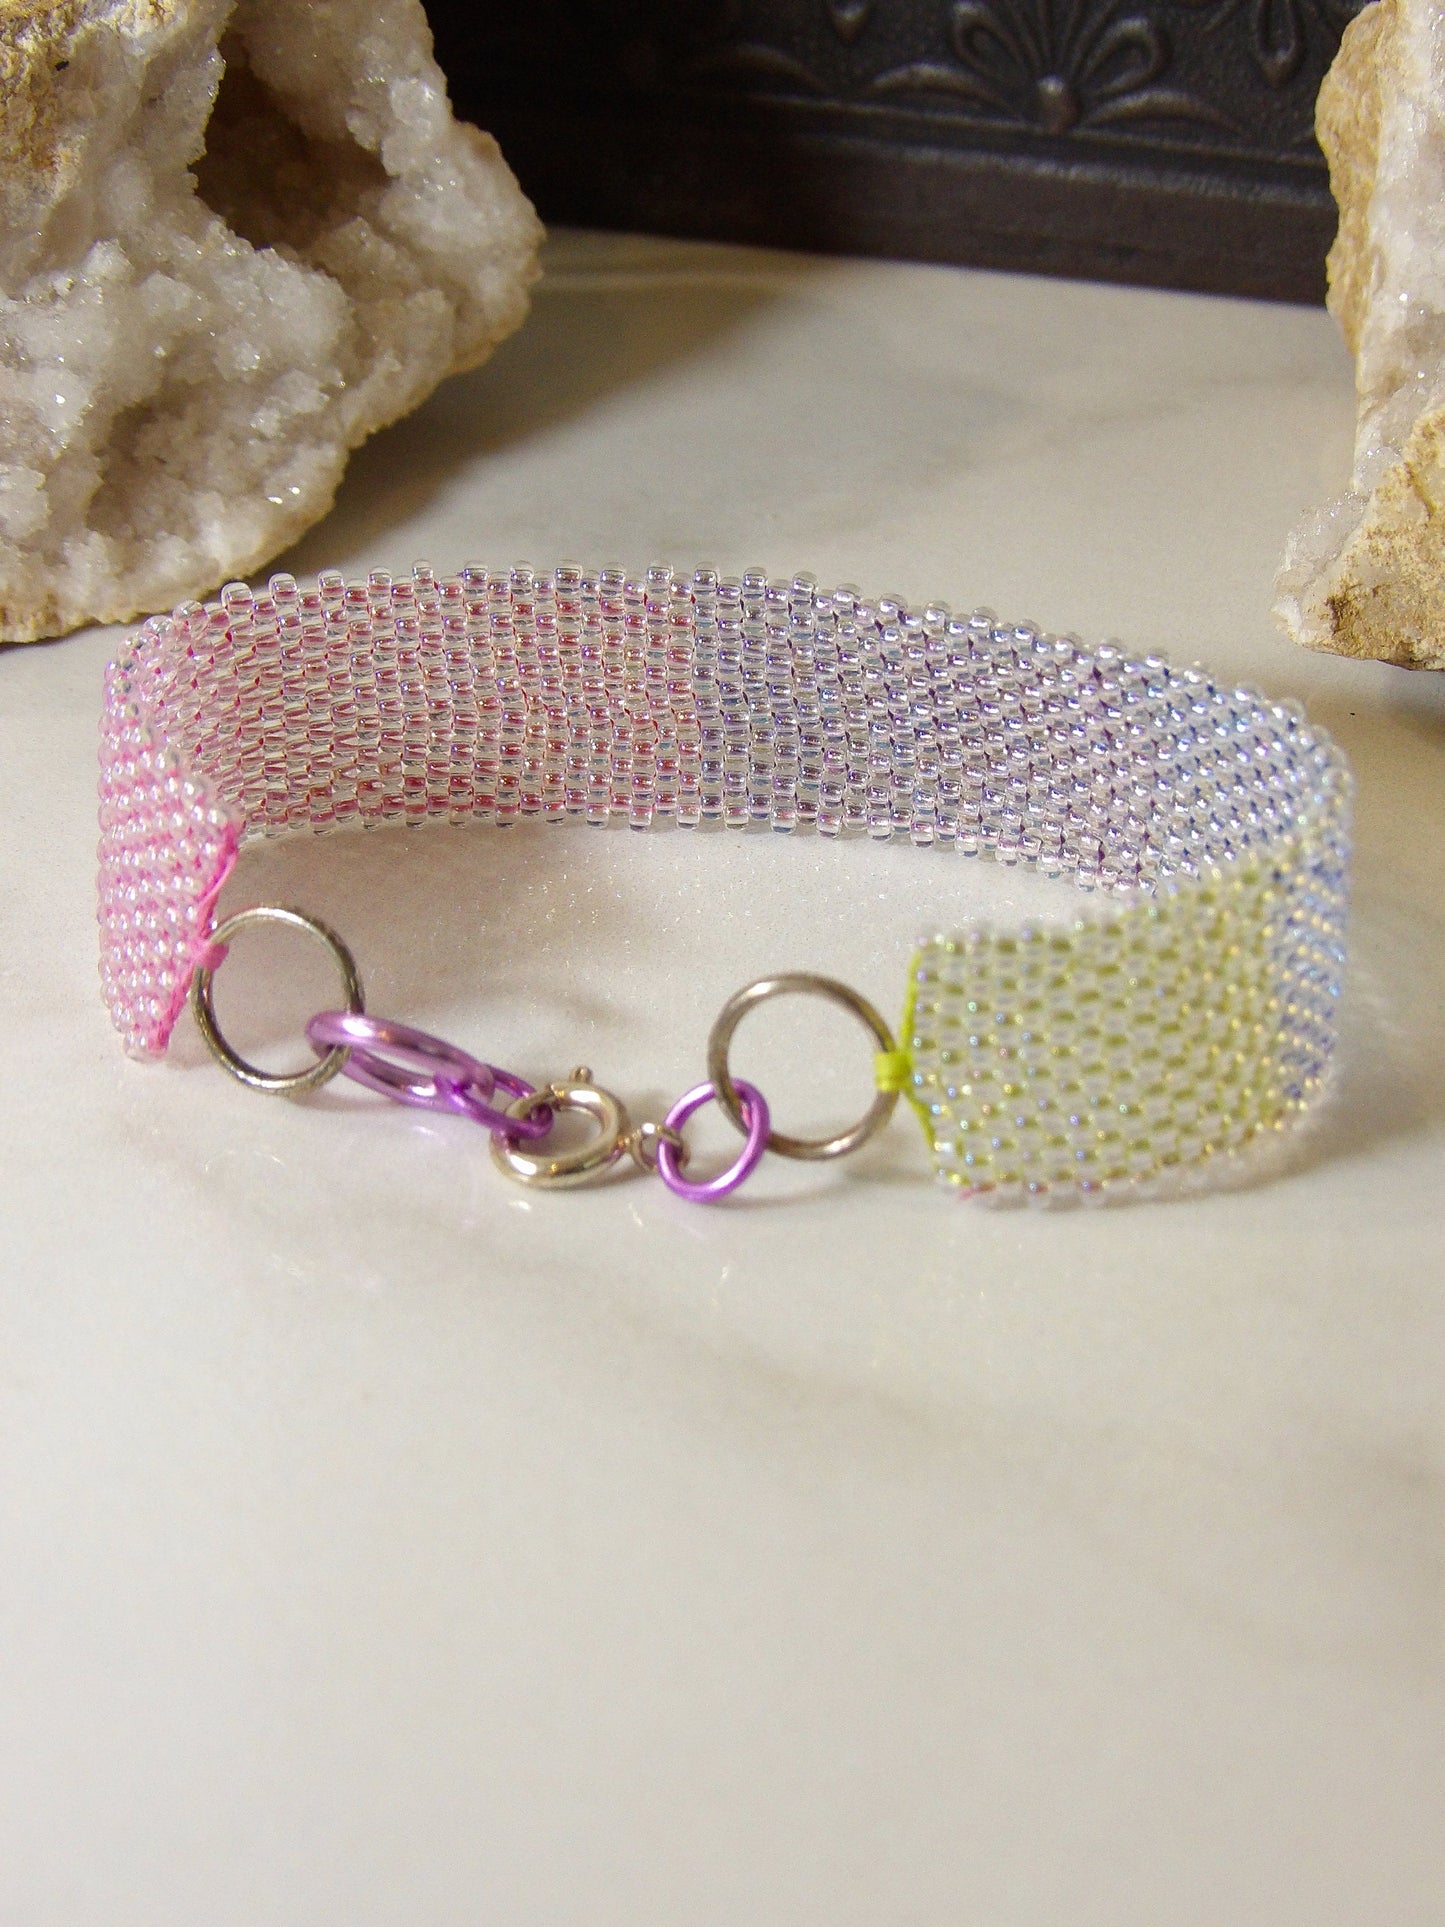 Boho Seed Bead Cuff Bracelet - Gradient Aurora Borealis | Handmade Bohemian Jewelry | Hippie Jewelry | Handwoven Beadwork Made In USA